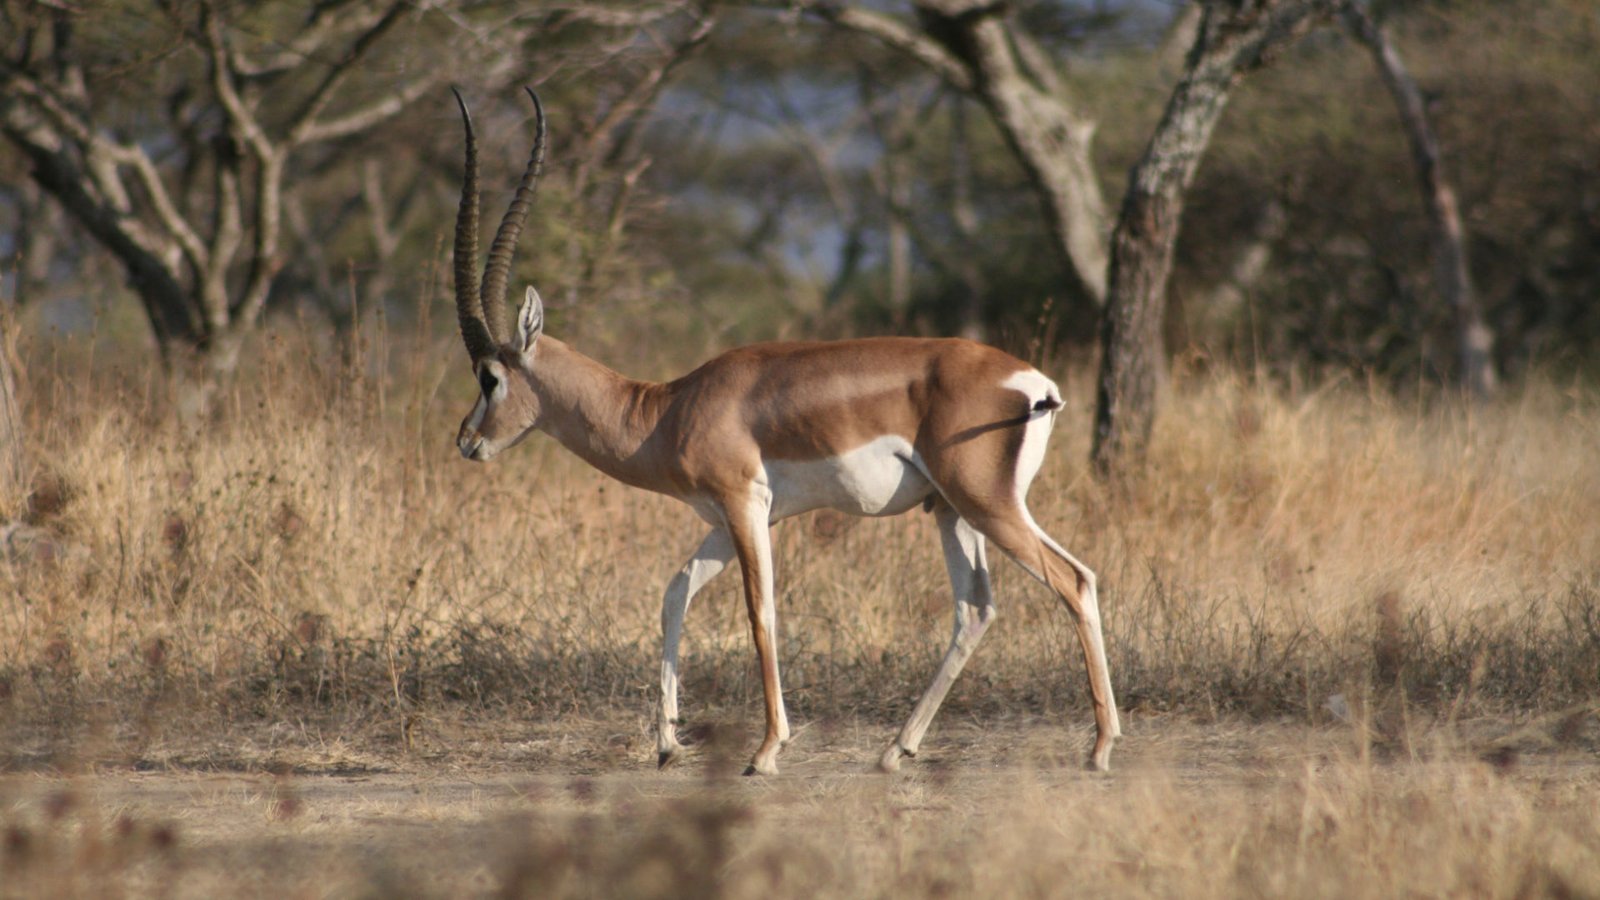 Abijata Shala Lake National Park | Grant's Gazelle | Carsten Brink